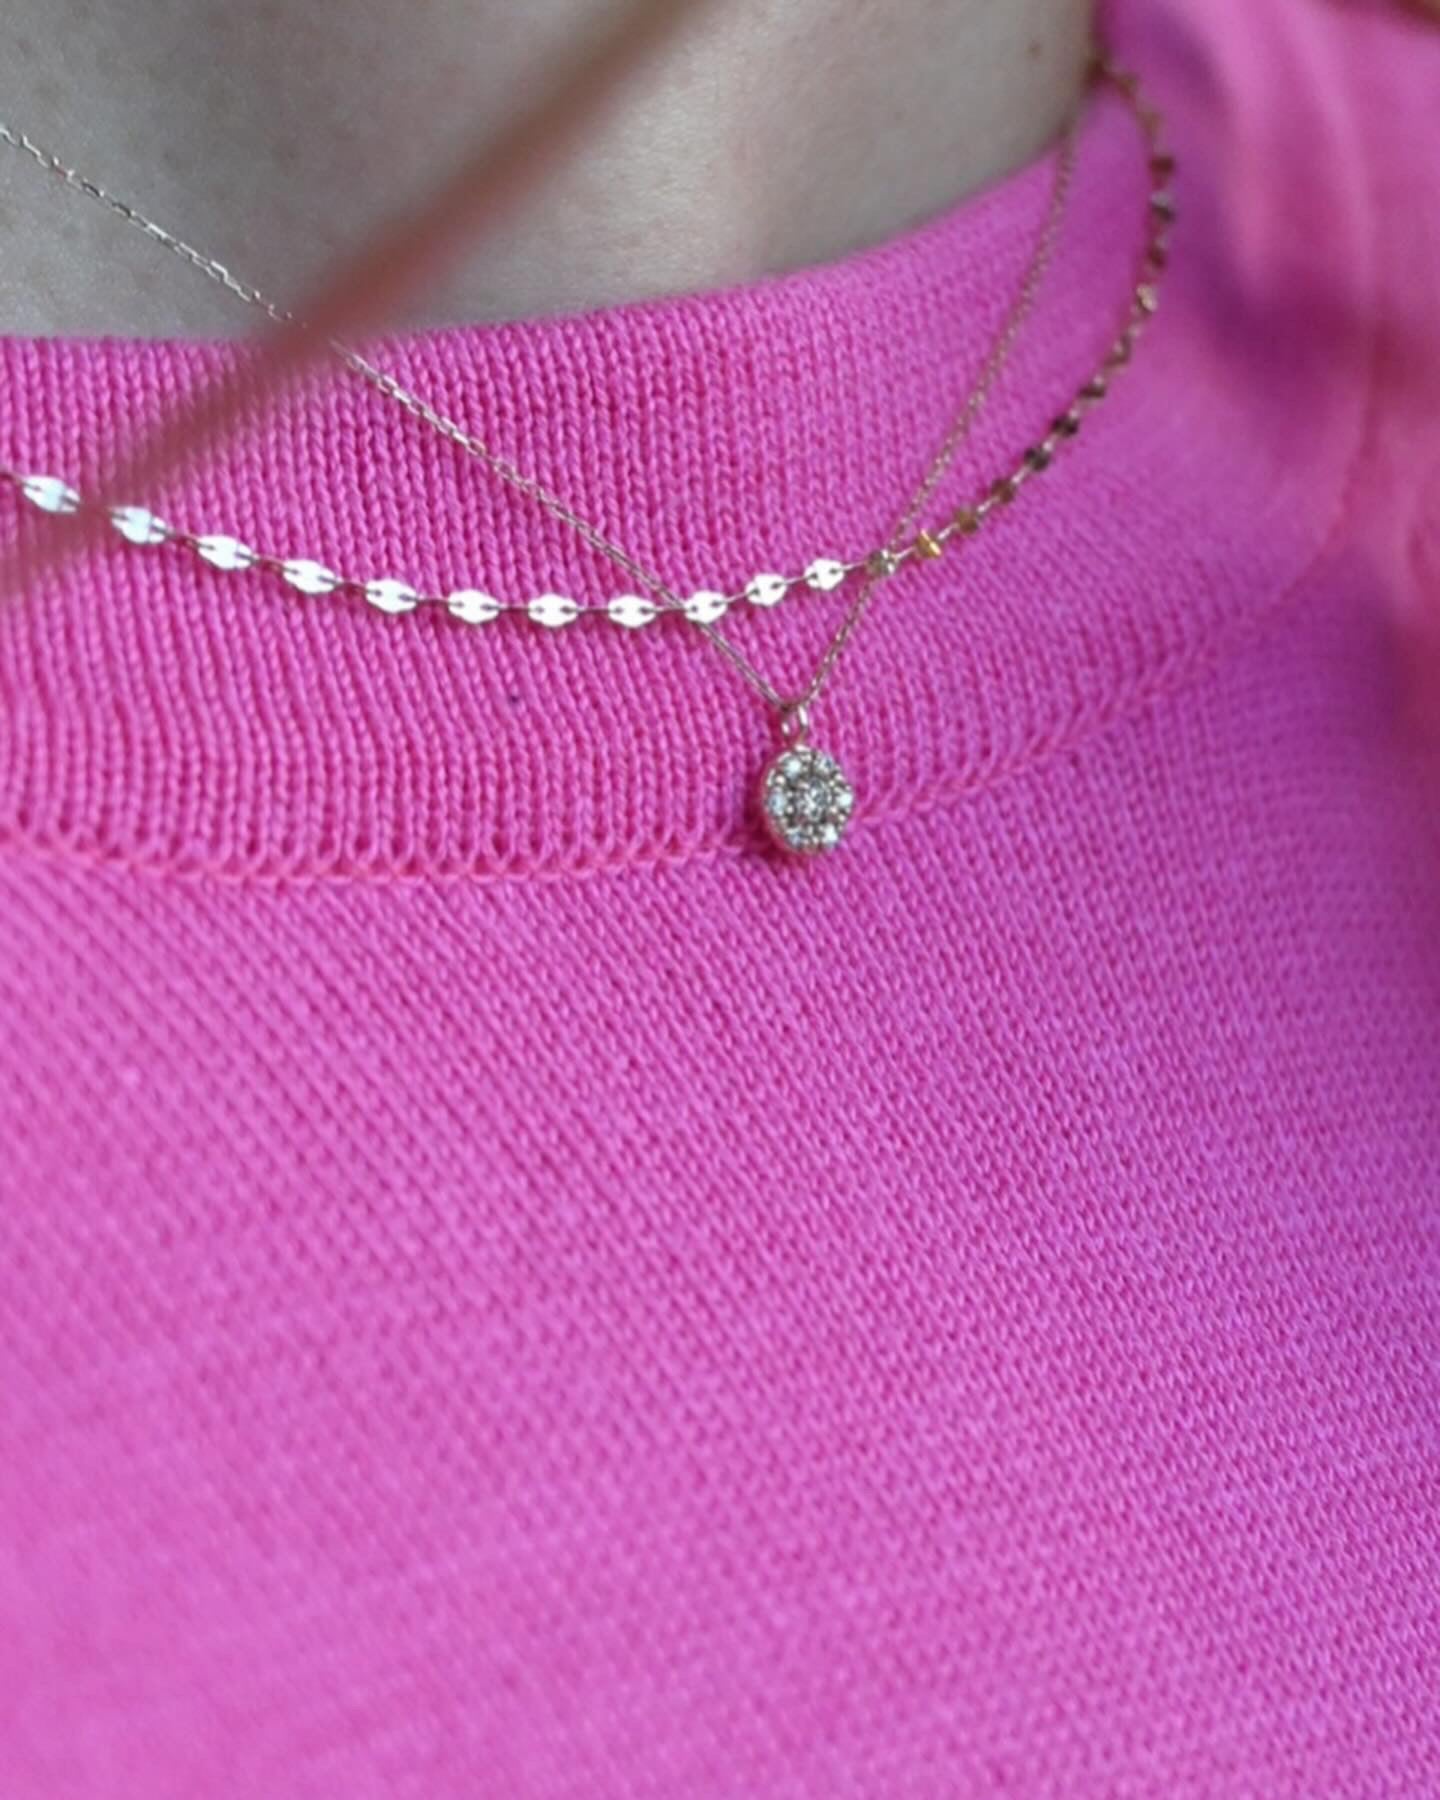 olivia diamond necklace